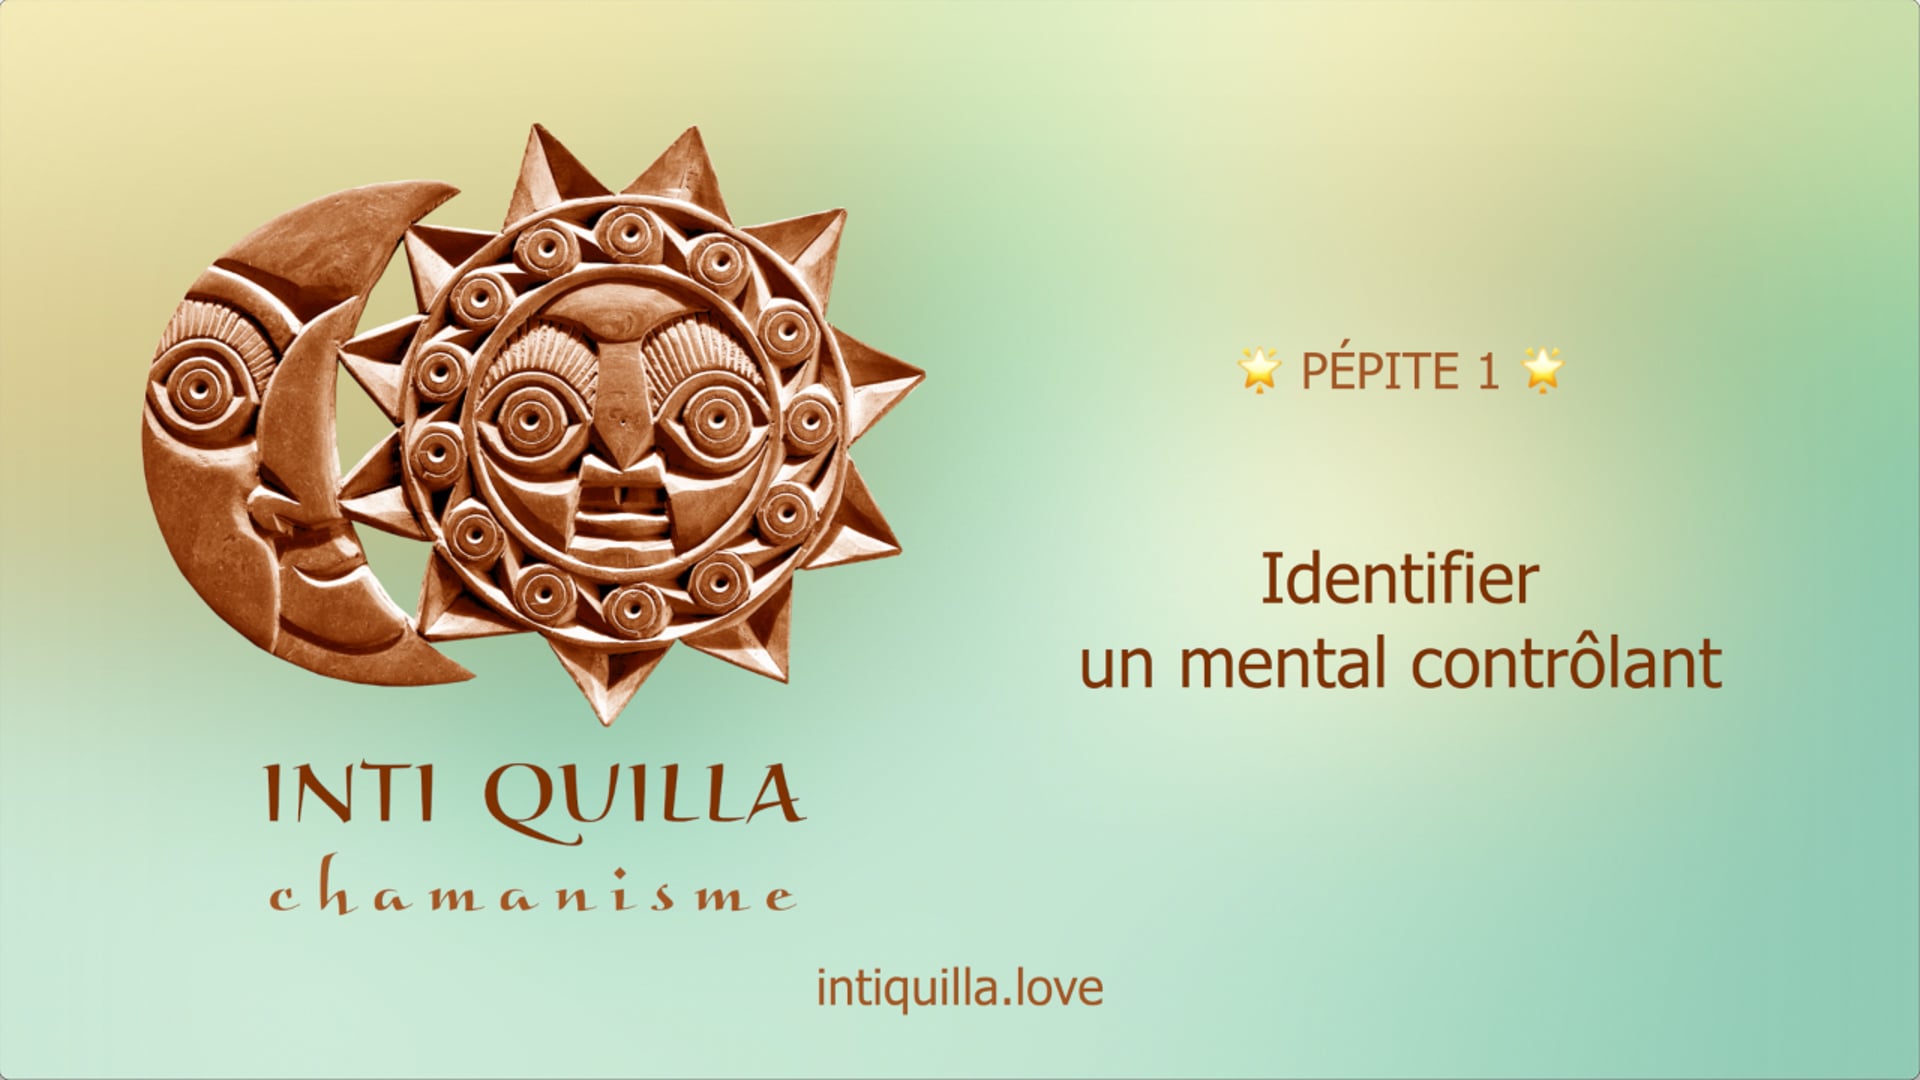 Identifier un mental contrôlant. Inti Quilla - Pépite 1